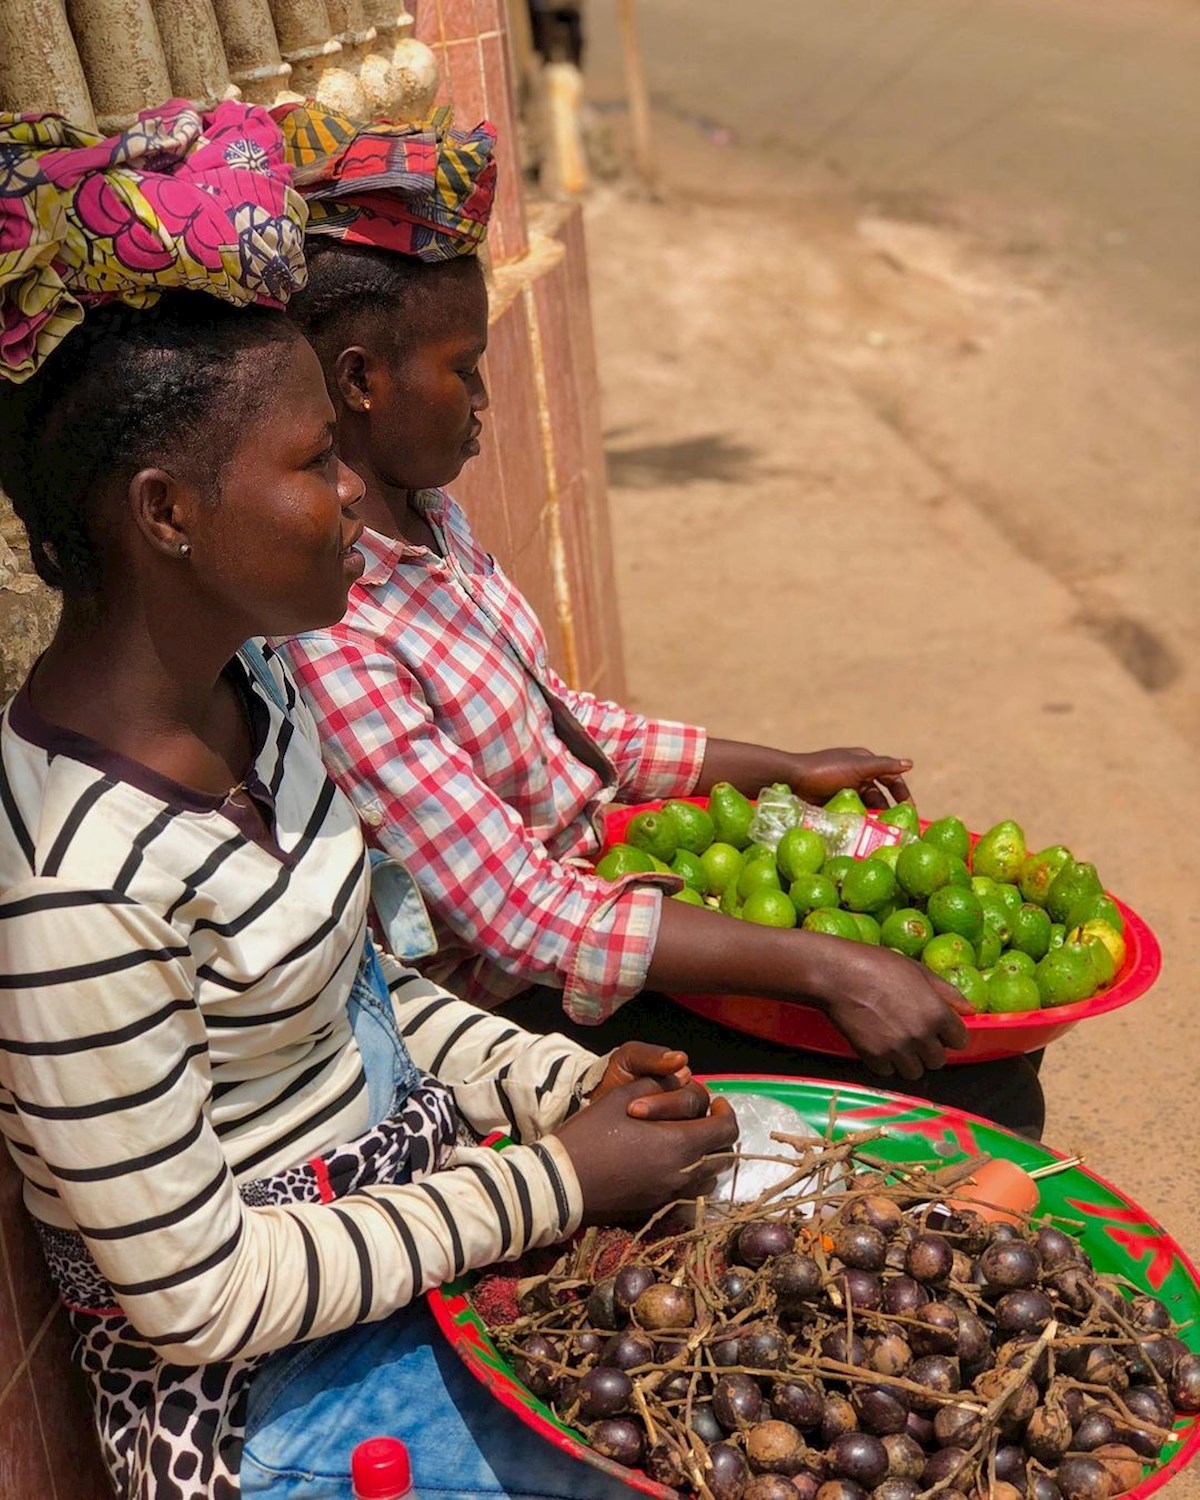 Women in Cameroon selling vegetables